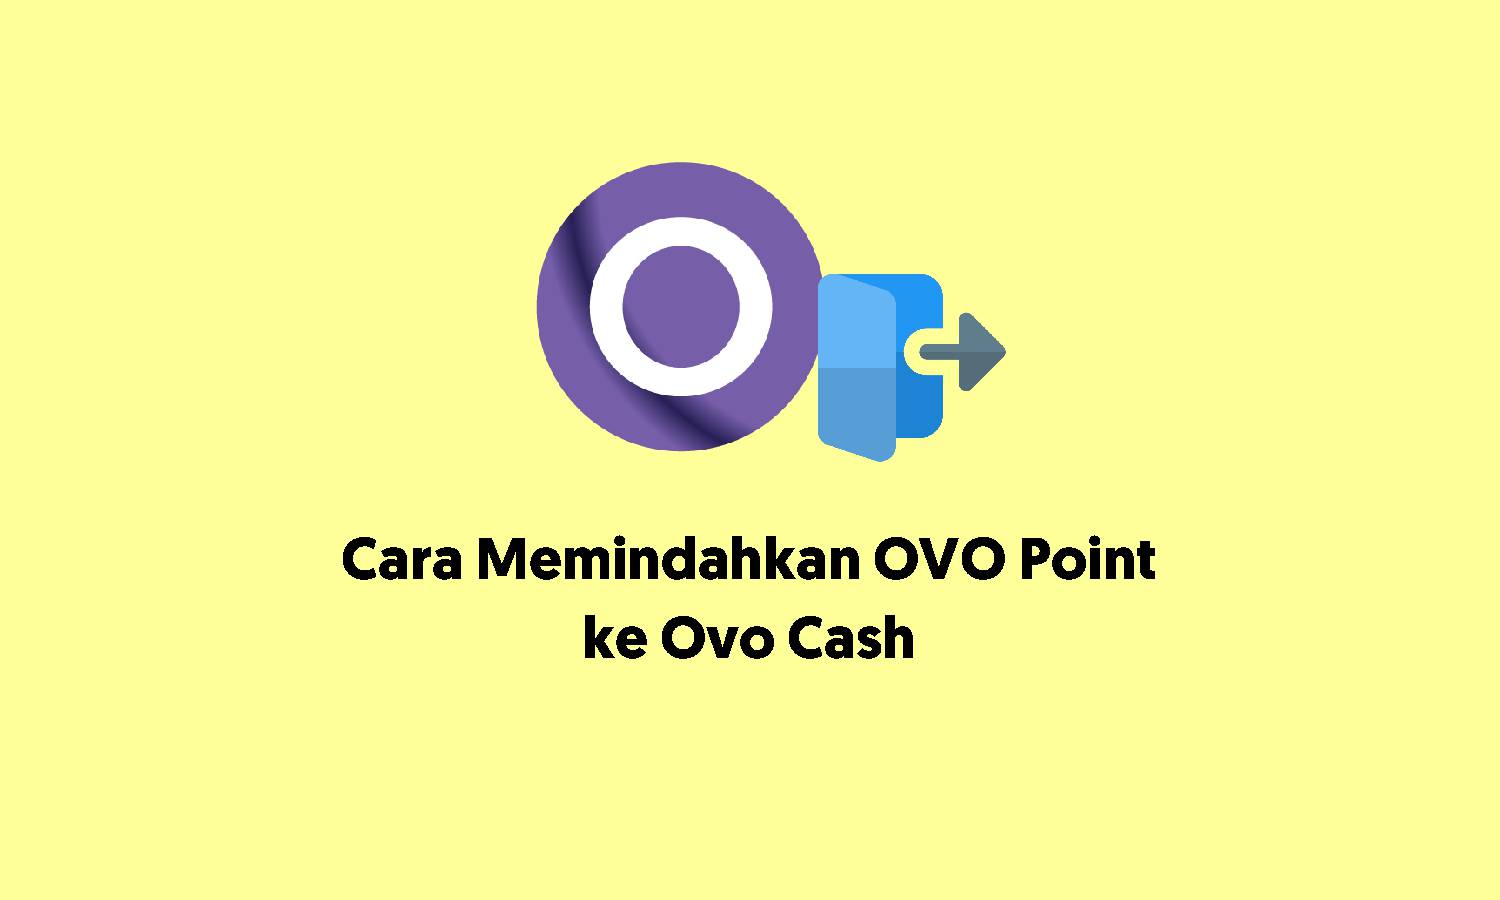 Cara Memindahkan OVO Point ke Ovo Cash